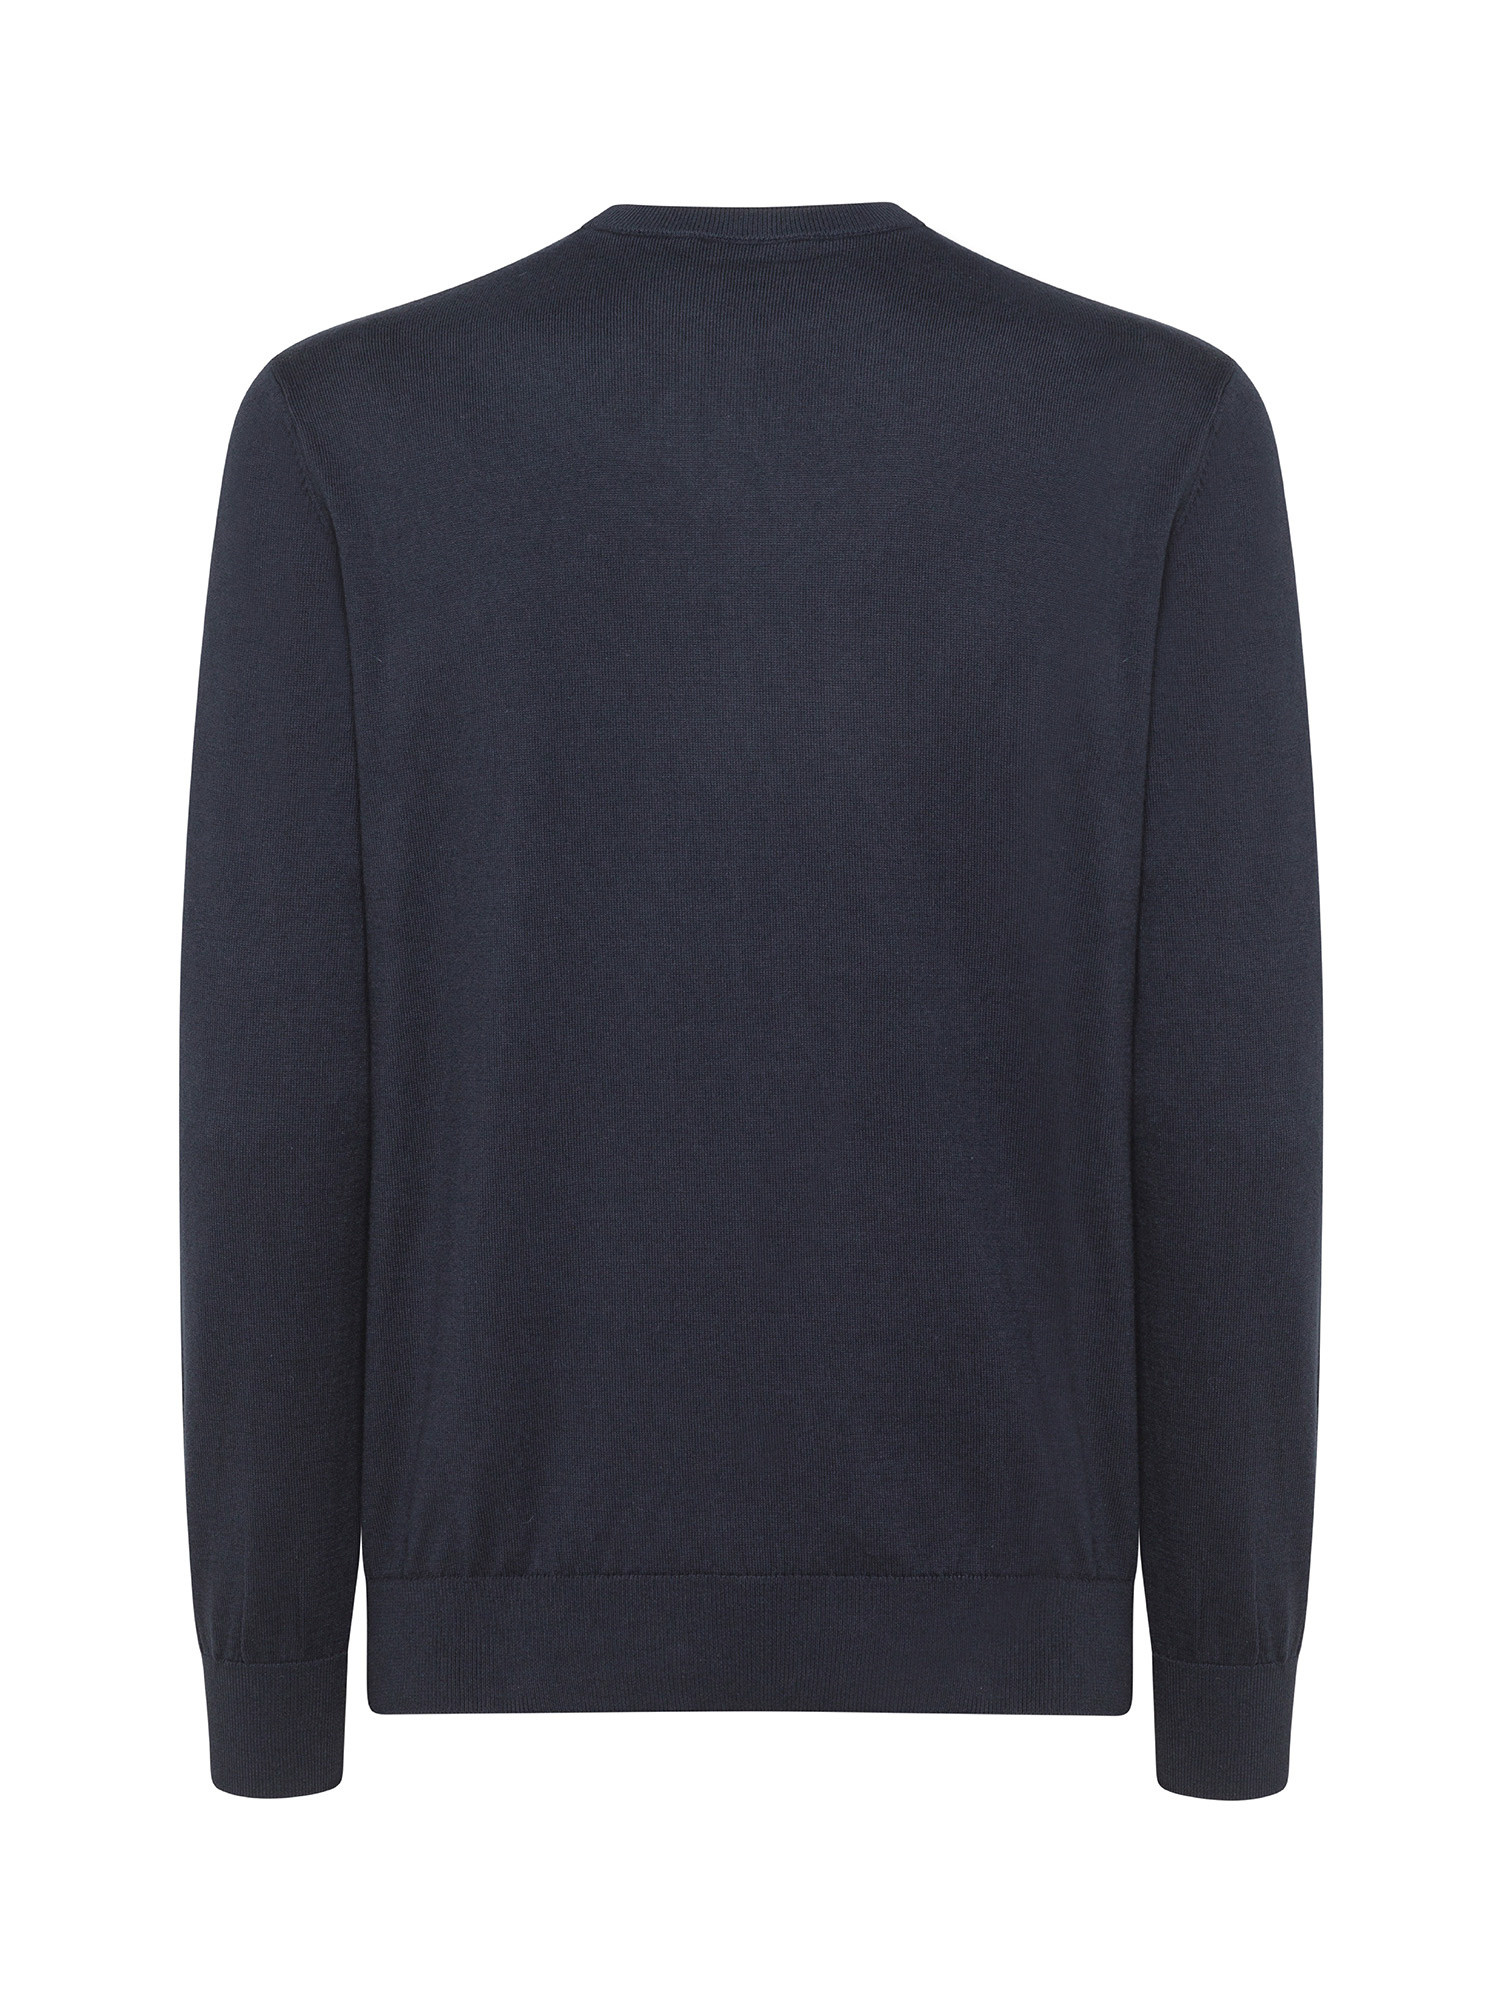 Armani Exchange - Cotton crew neck sweatshirt, Dark Blue, large image number 1